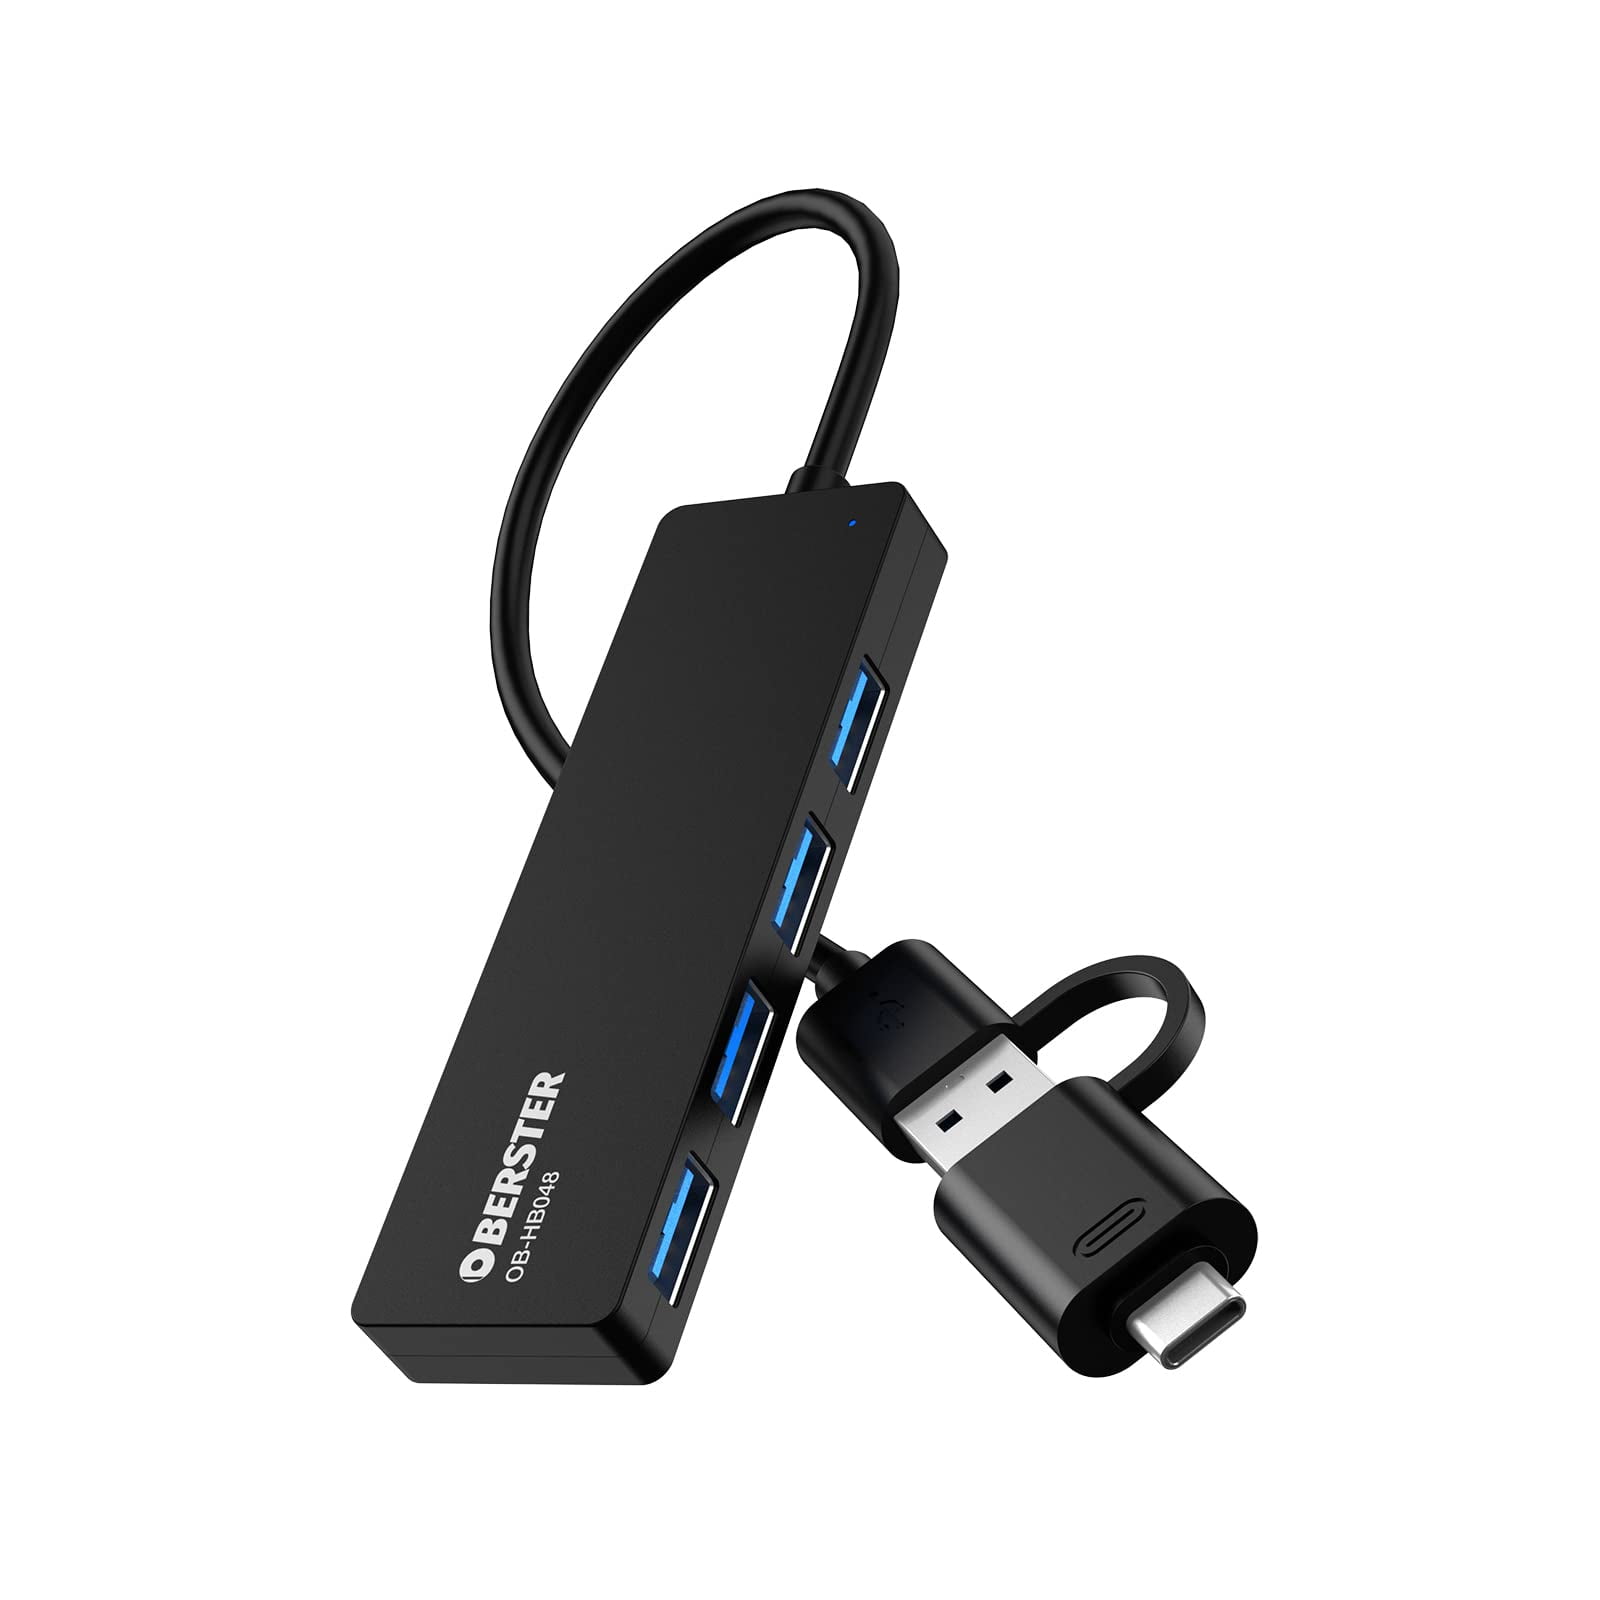 USB 3.0 USB Splitter with 4-Port 5Gbps and USB C Adapter, Ultra Slim USB 3.0 Data Hub for MacBook Pro/Air, Mac Mini, iPad, PC, Laptops, PS4/5, Flash Drive, Mobile